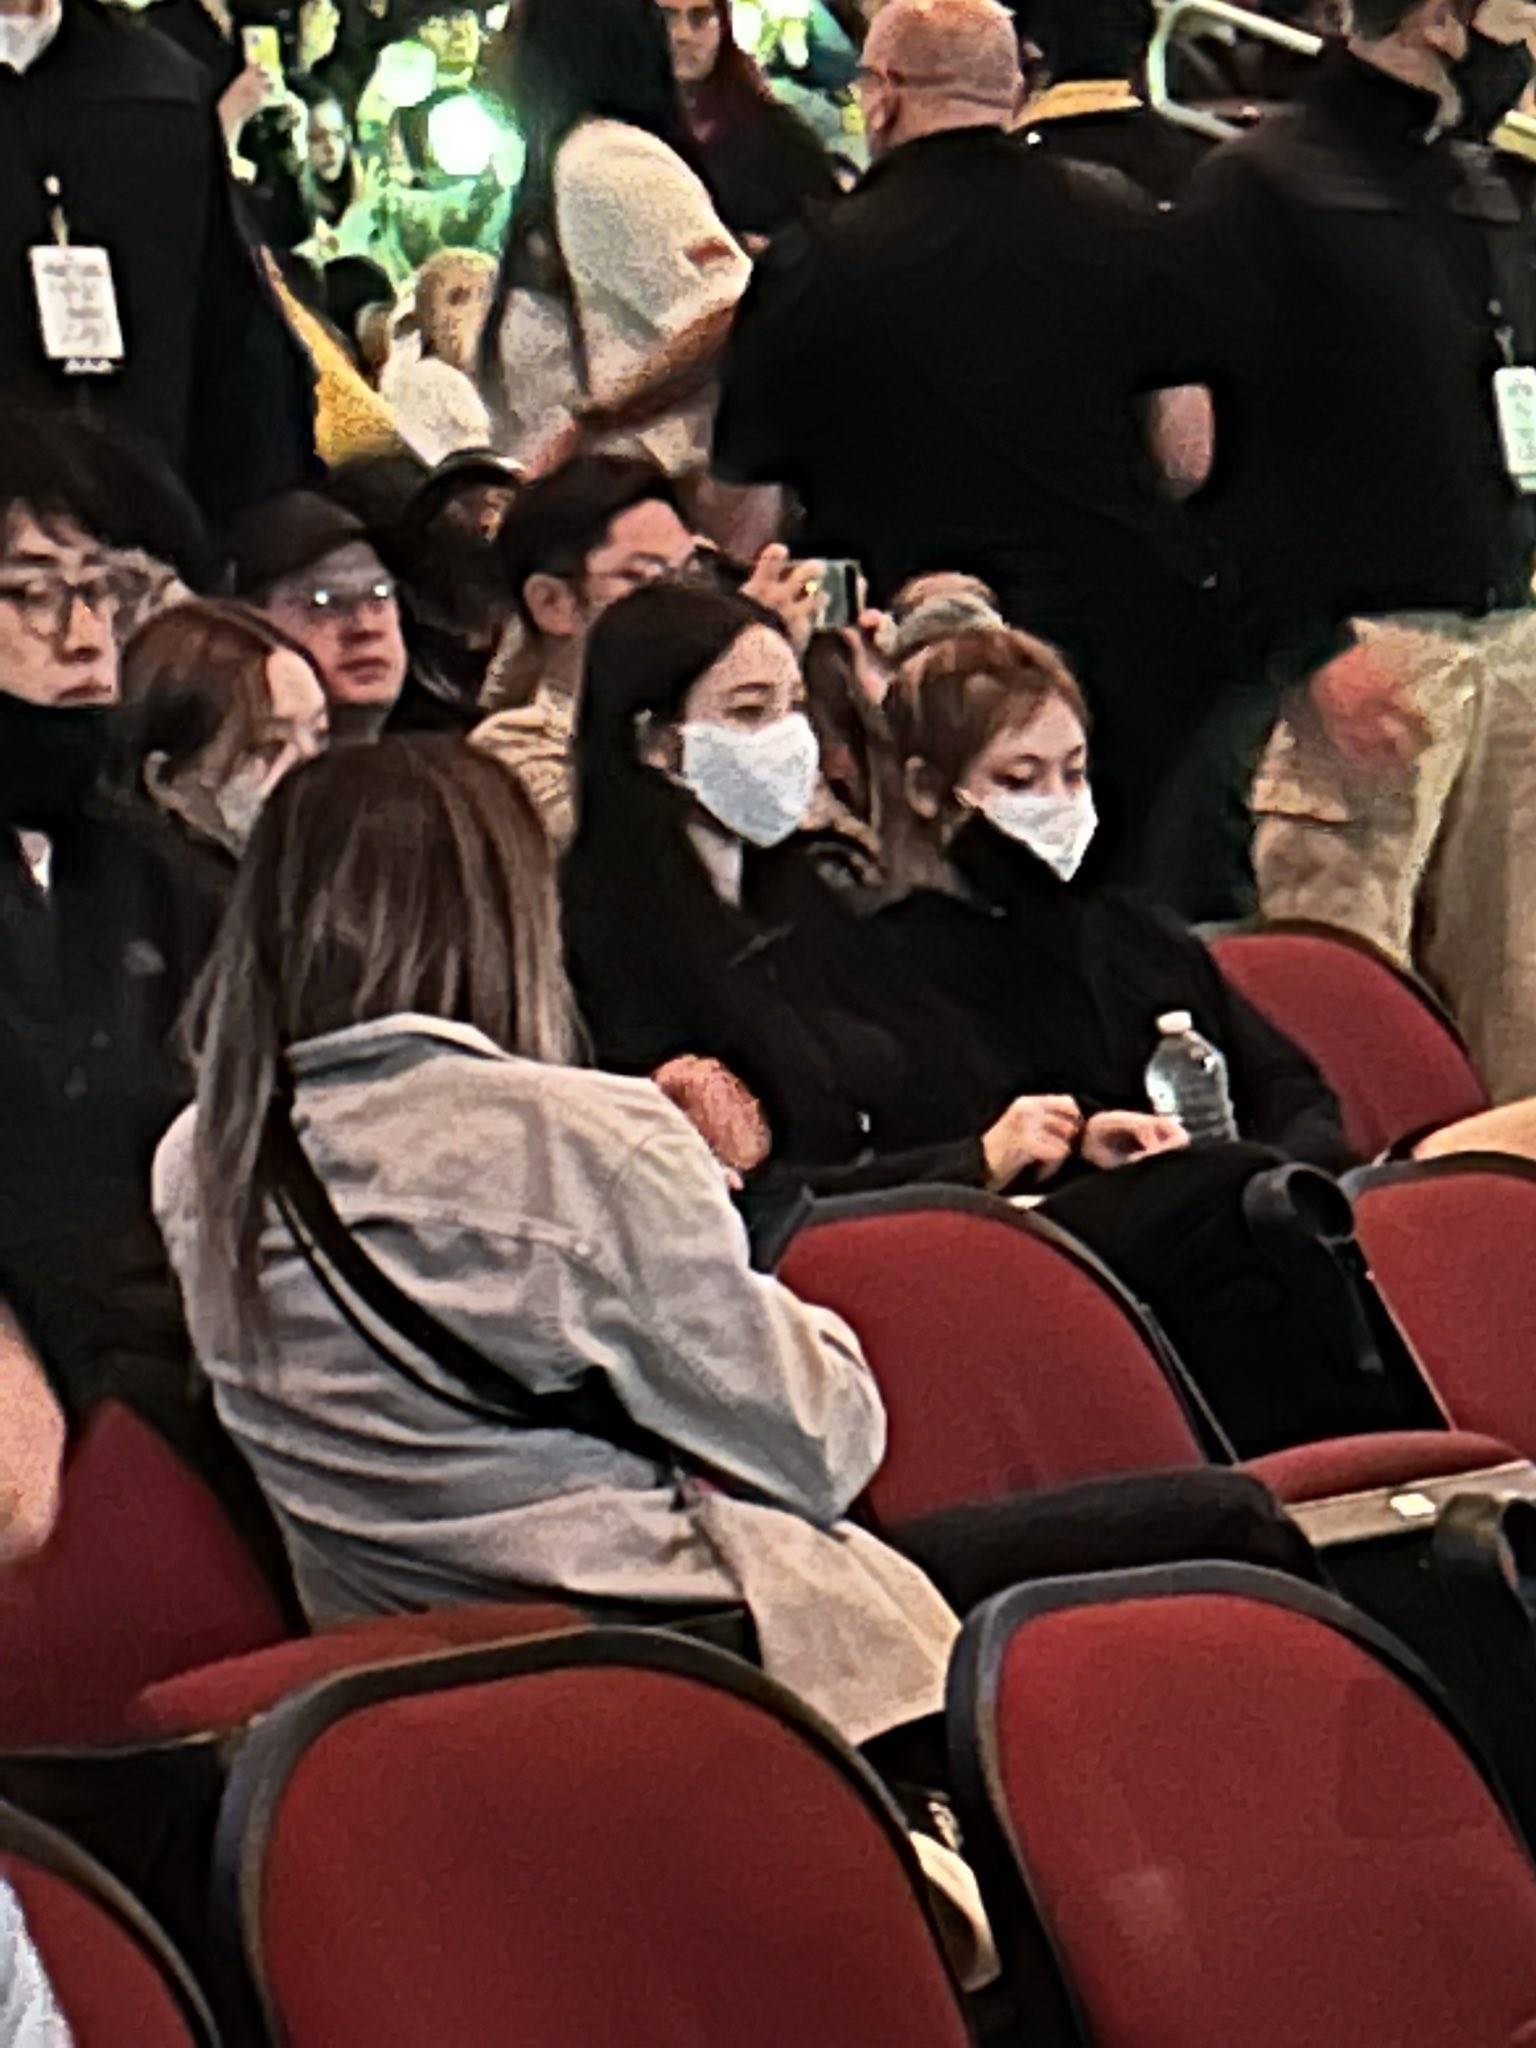 Momen anggota aespa datang ke konser solo NCT 127